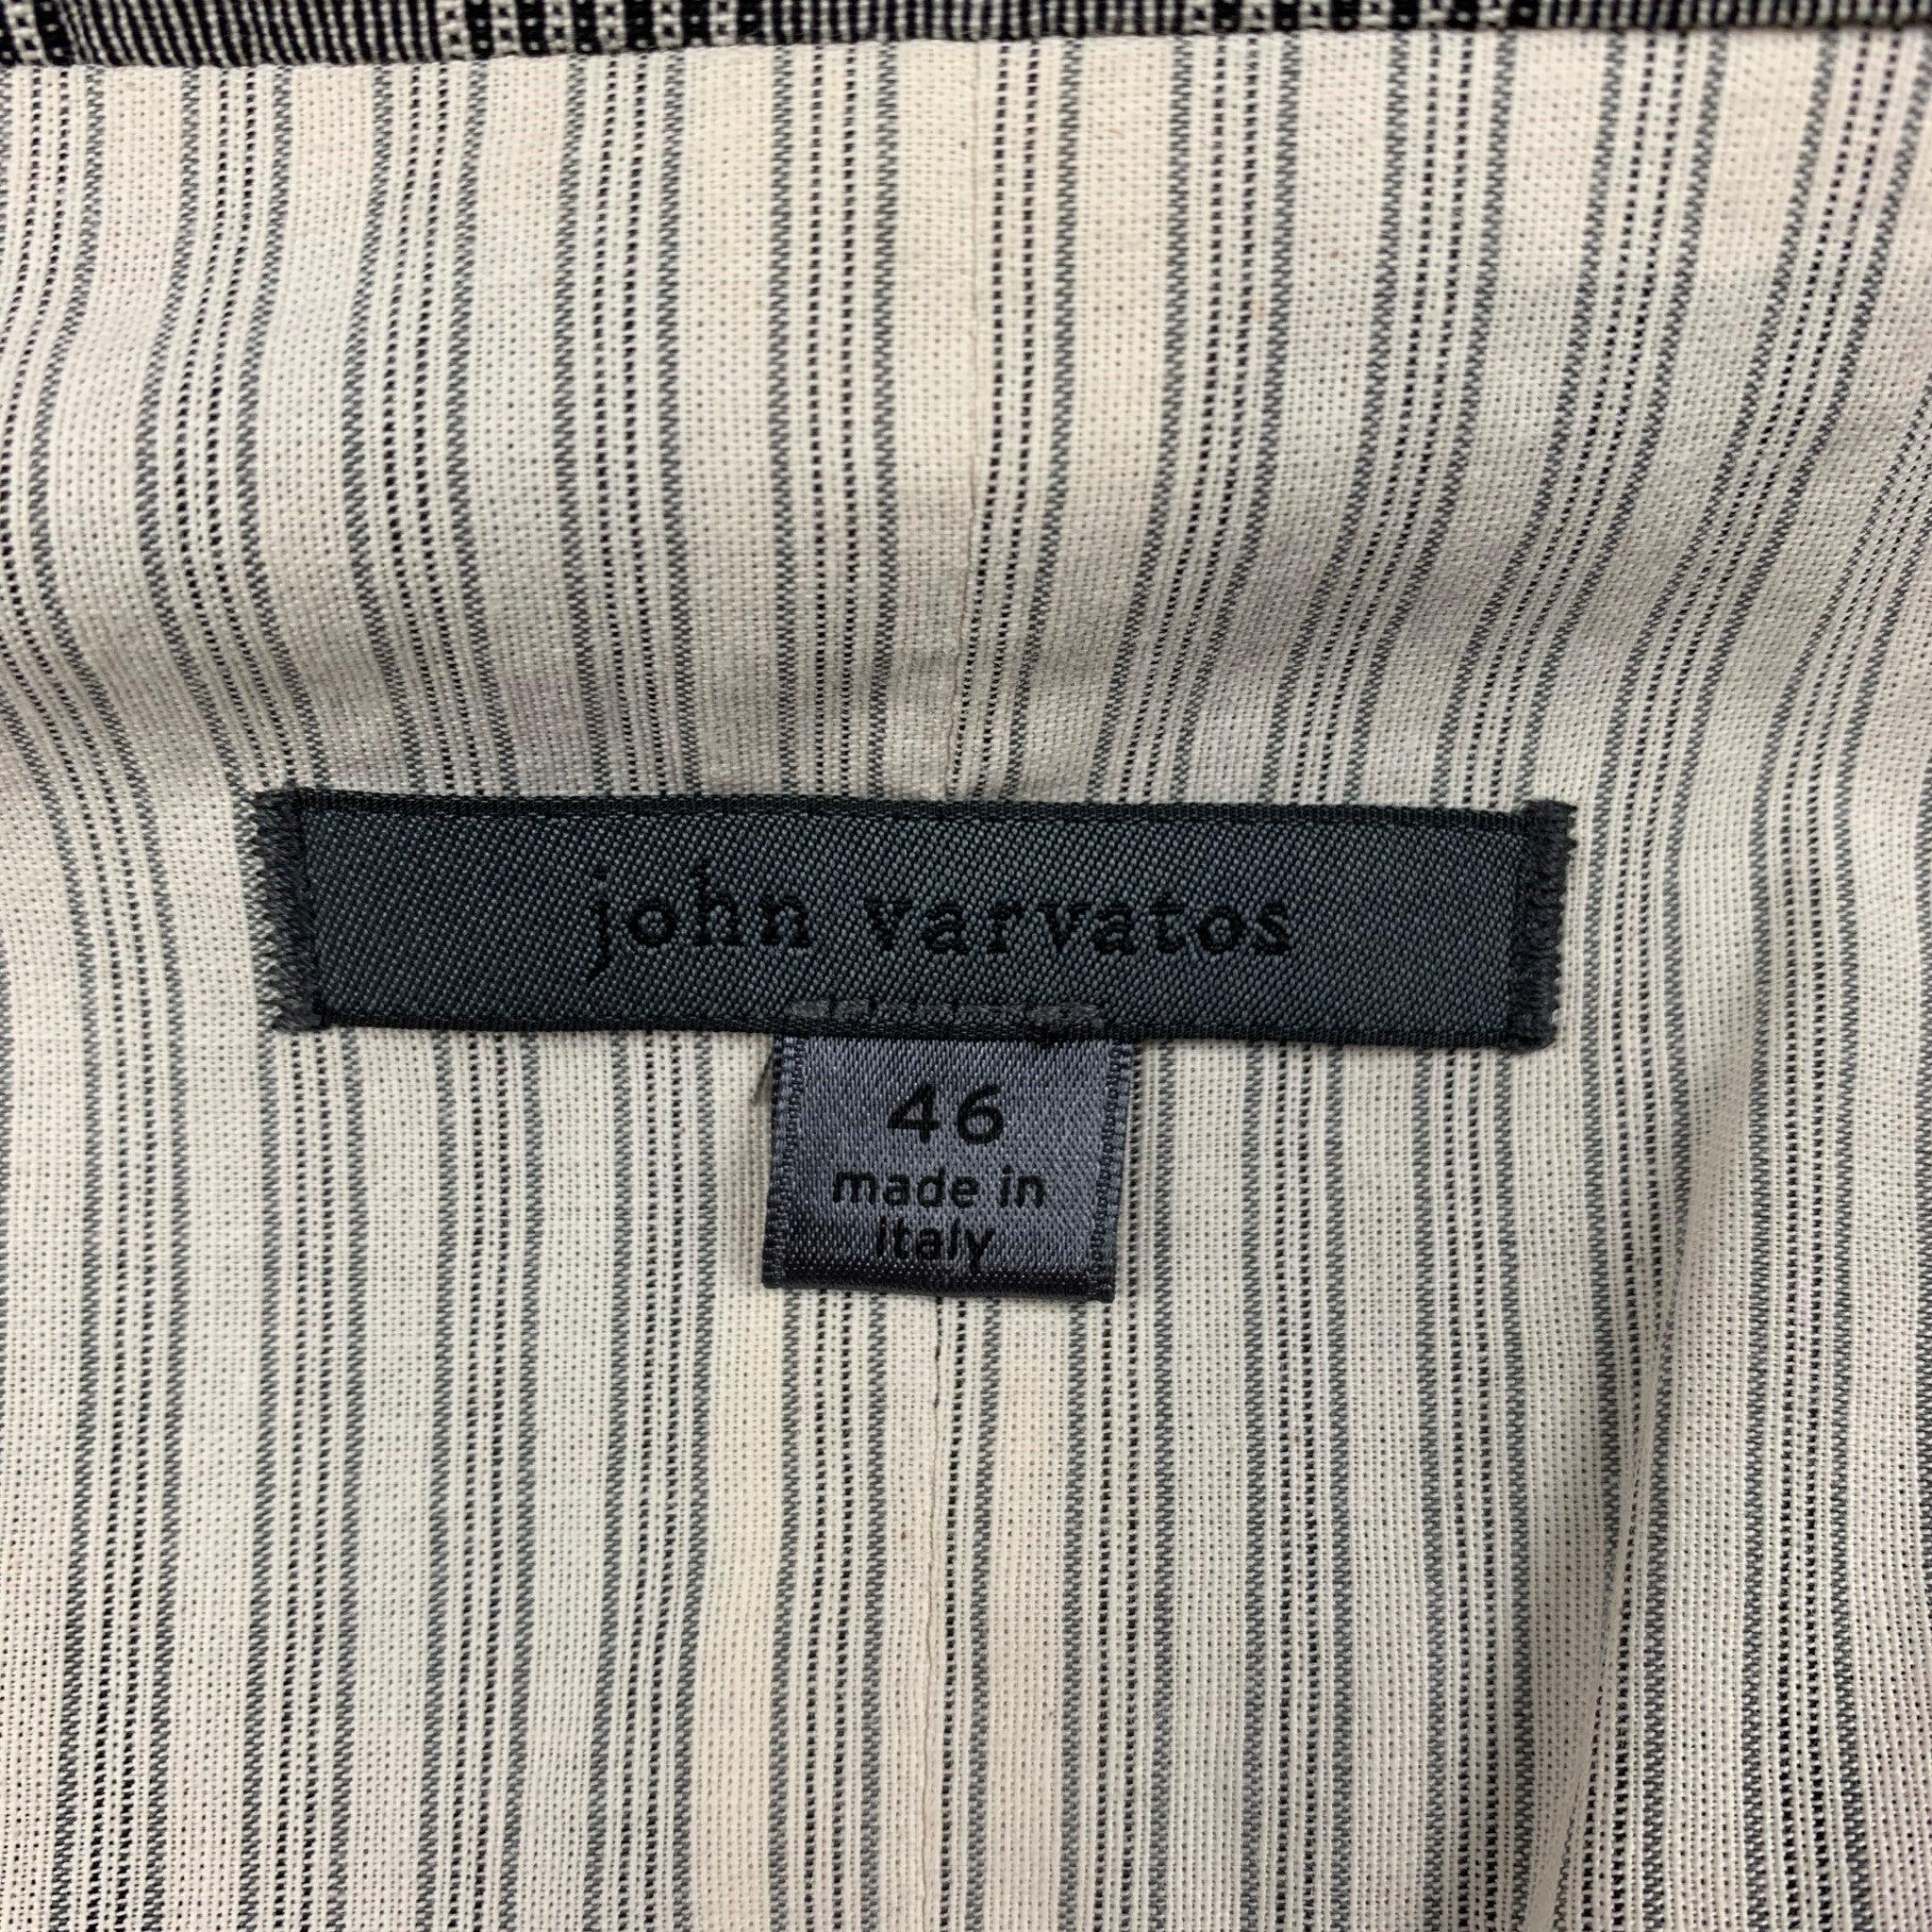 JOHN VARVATOS Size 36 Black White Glenplaid Wool Peak Lapel Vest Suit For Sale 3